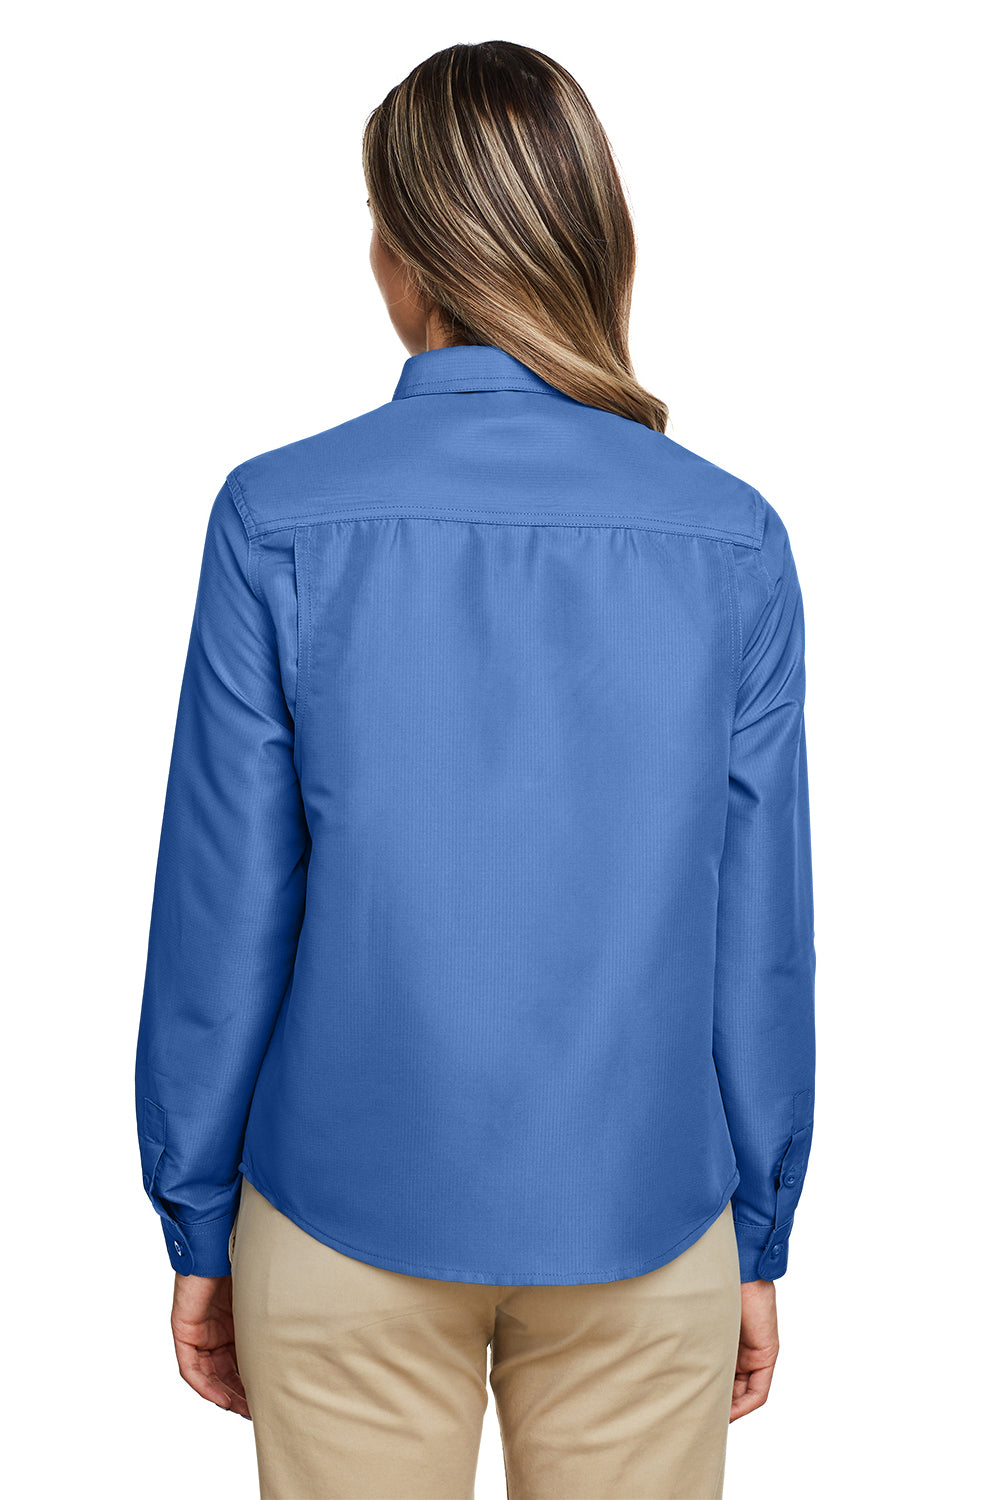 Harriton M580LW Womens Key West Performance Moisture Wicking Long Sleeve Button Down Shirt Pool Blue Back